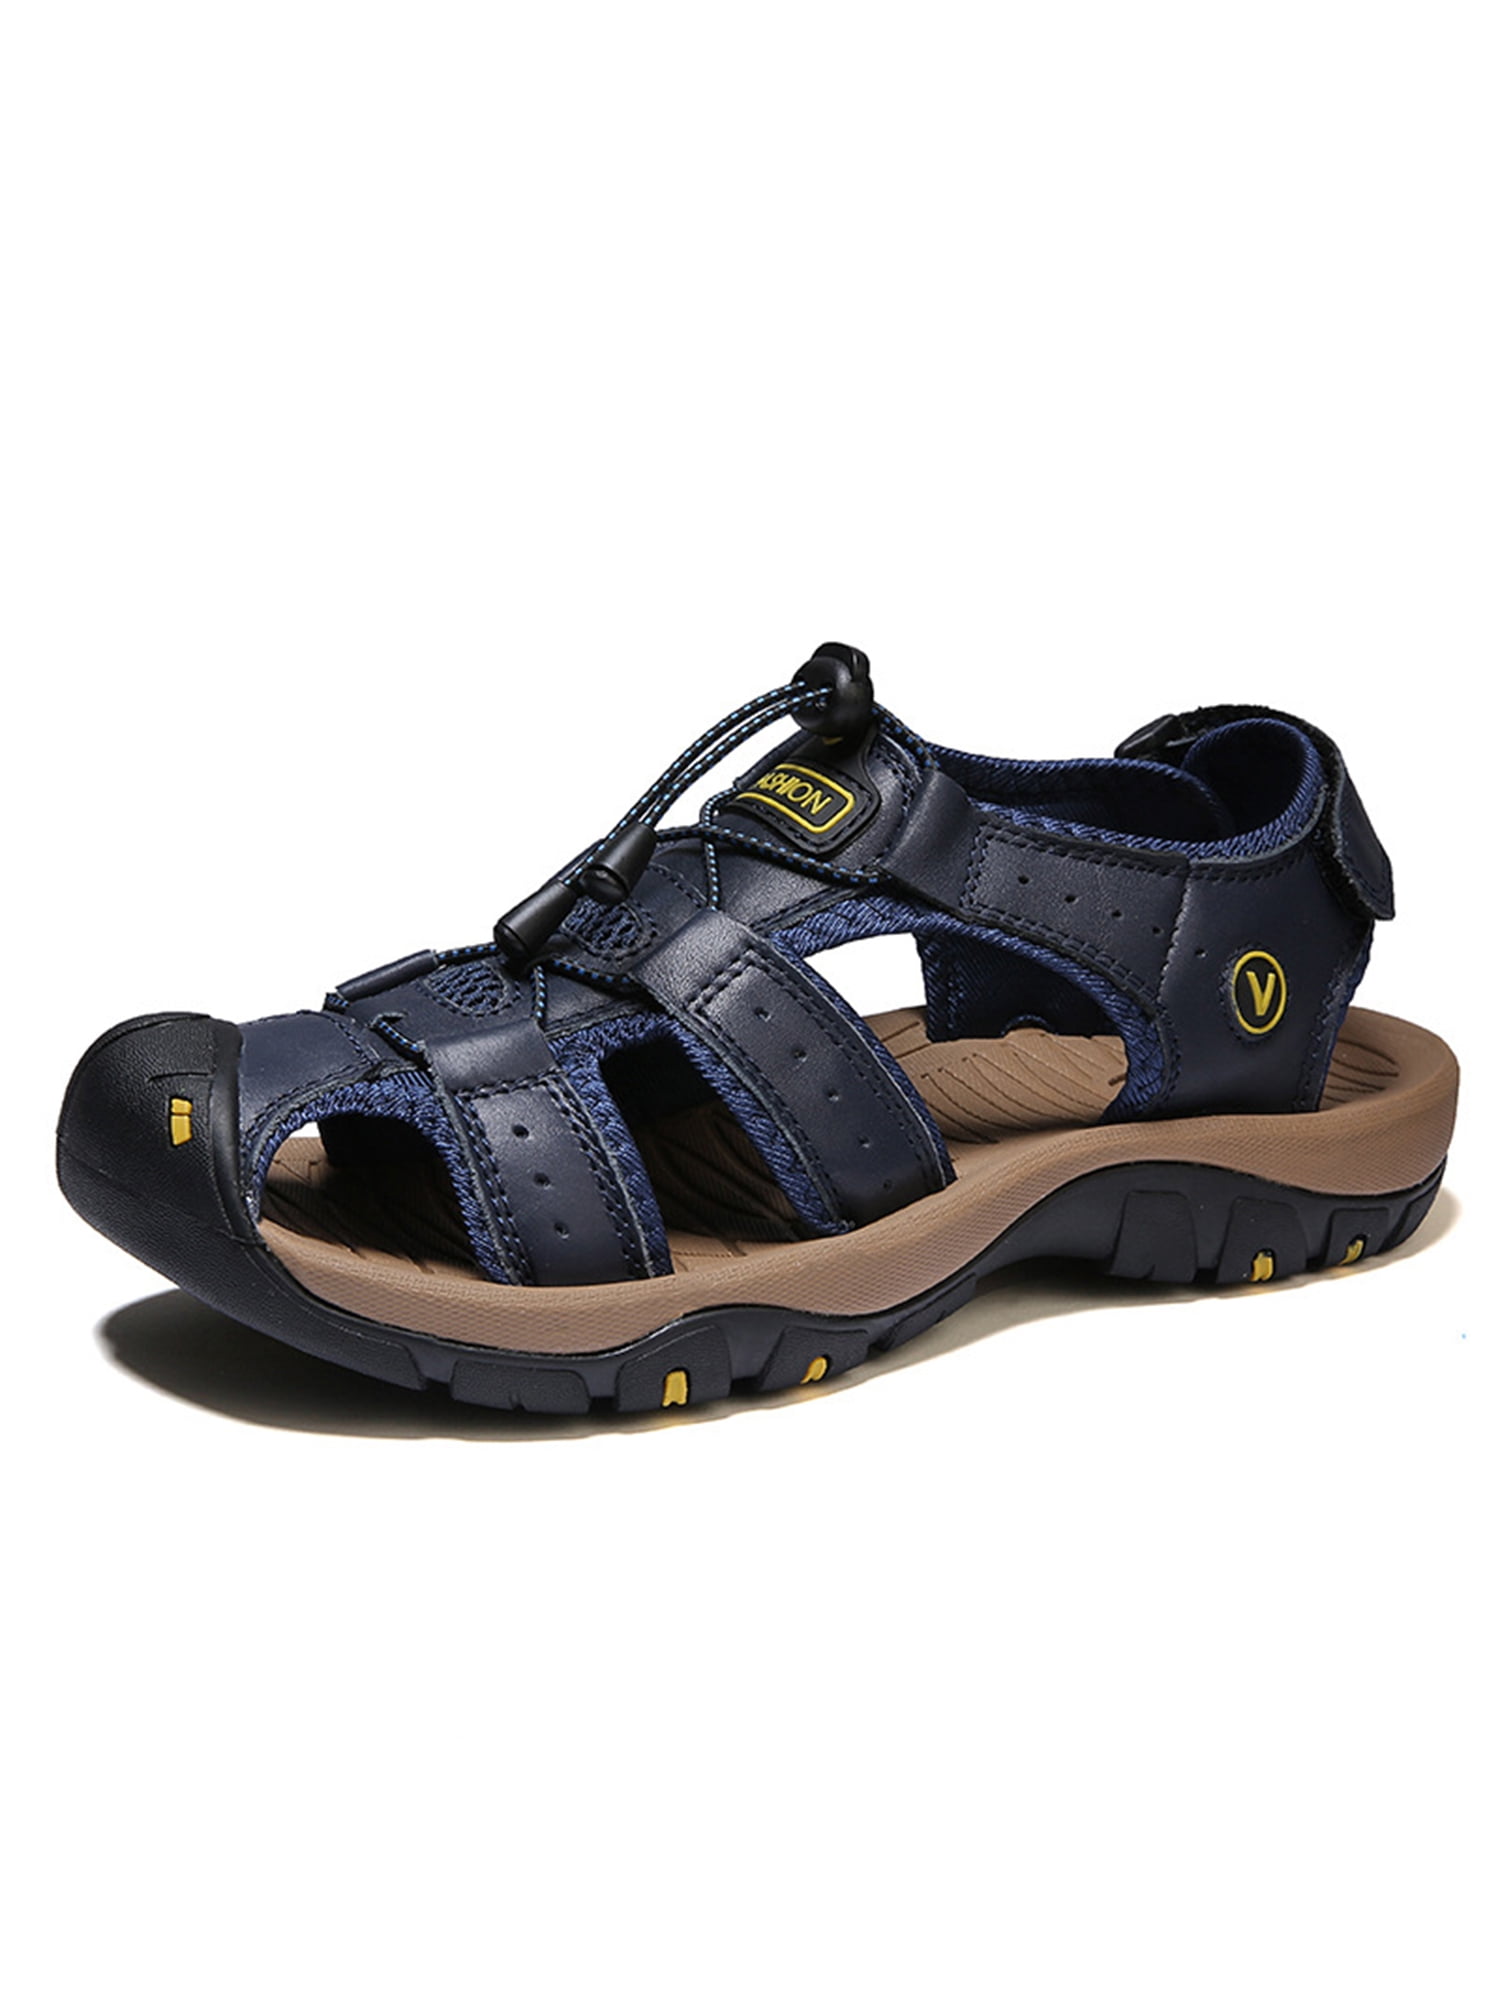 Zodanni Mens Hiking Sandal Closed Toe Sport Sandals Summer Beach Shoes ...